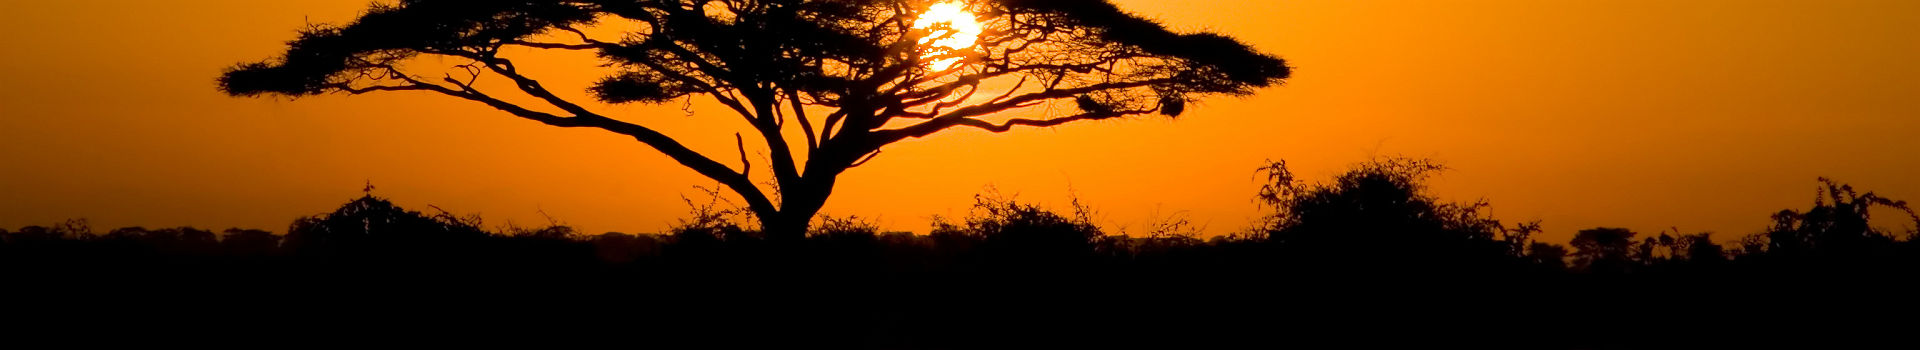 Acacia au coucher du soleil au Amboseli Natural Park, Kenya